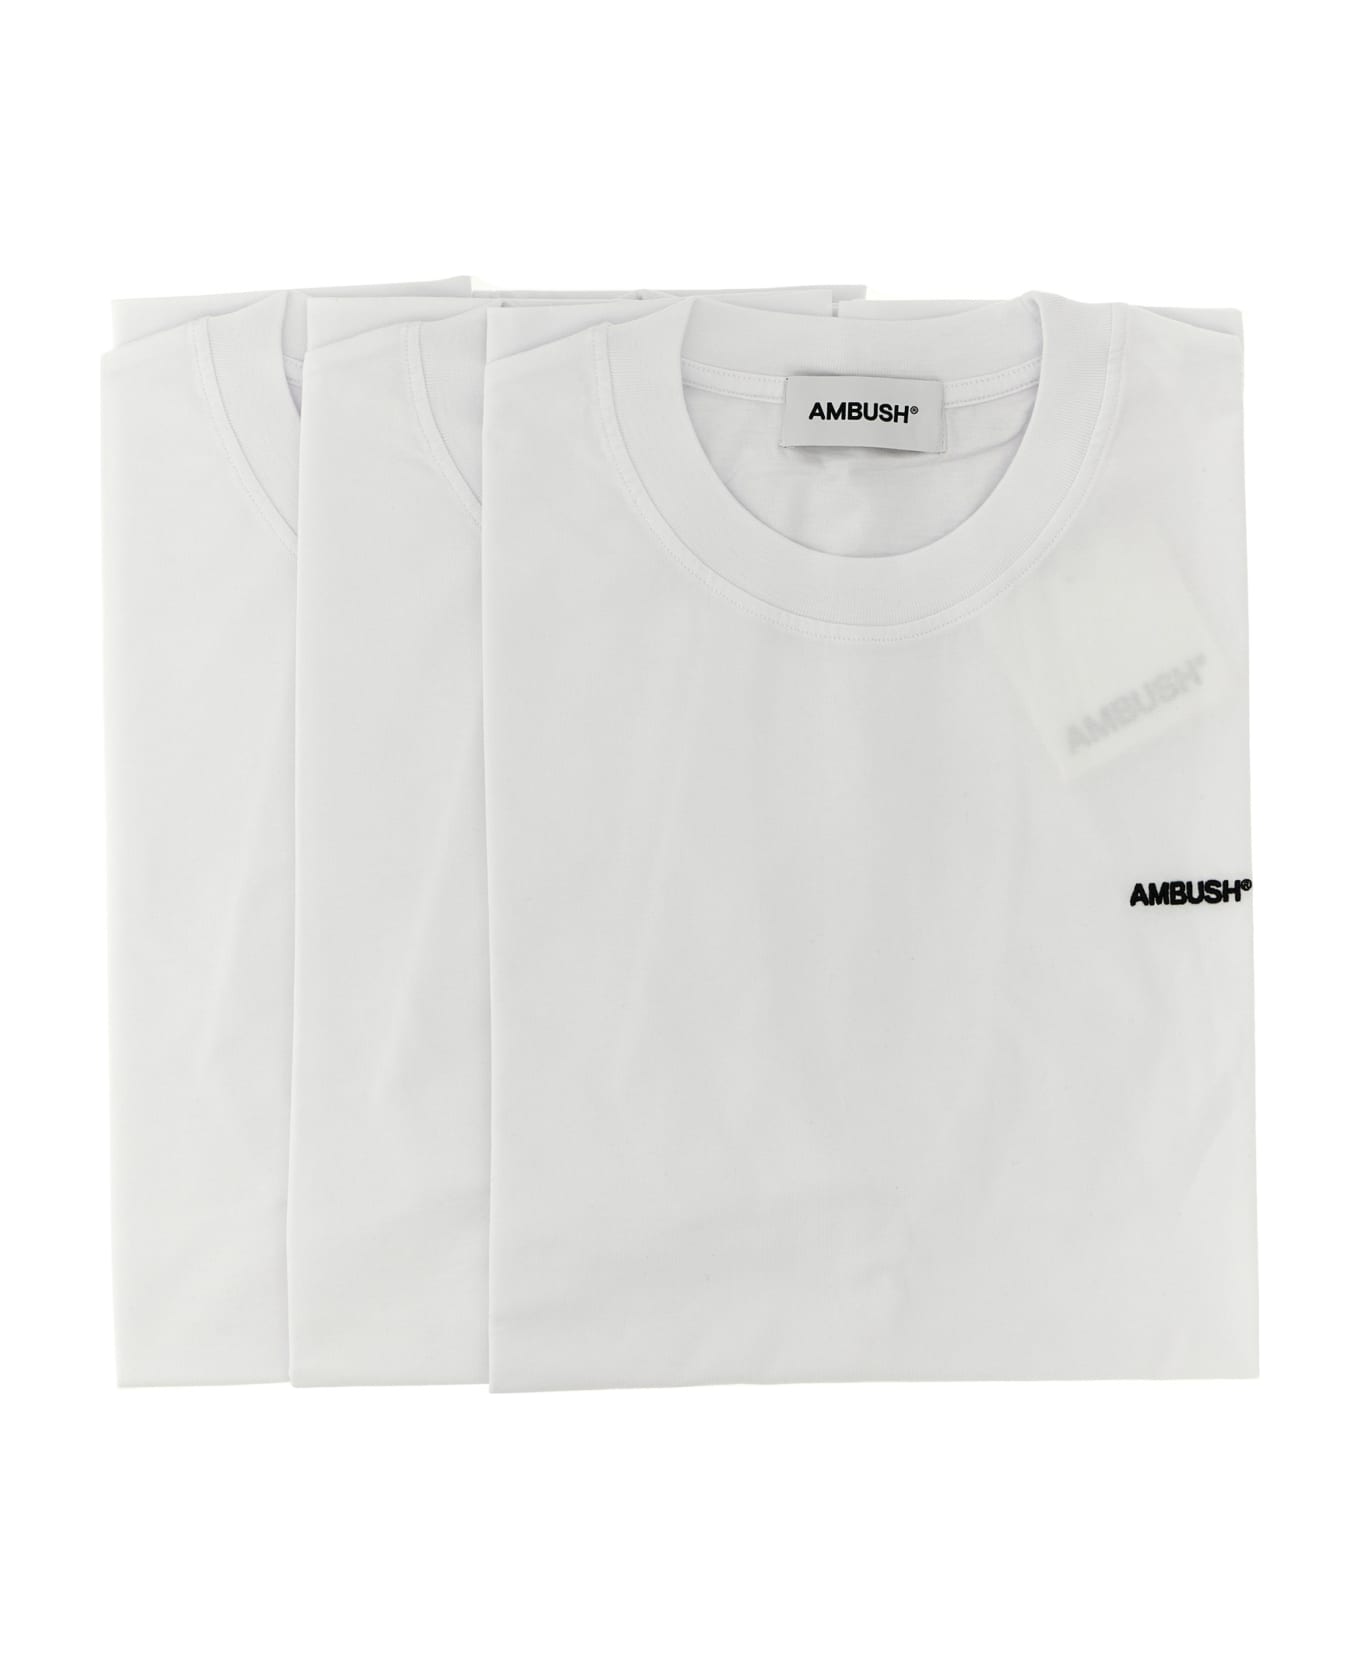 AMBUSH 3 Pack T-shirt - BLANC DE BLANC